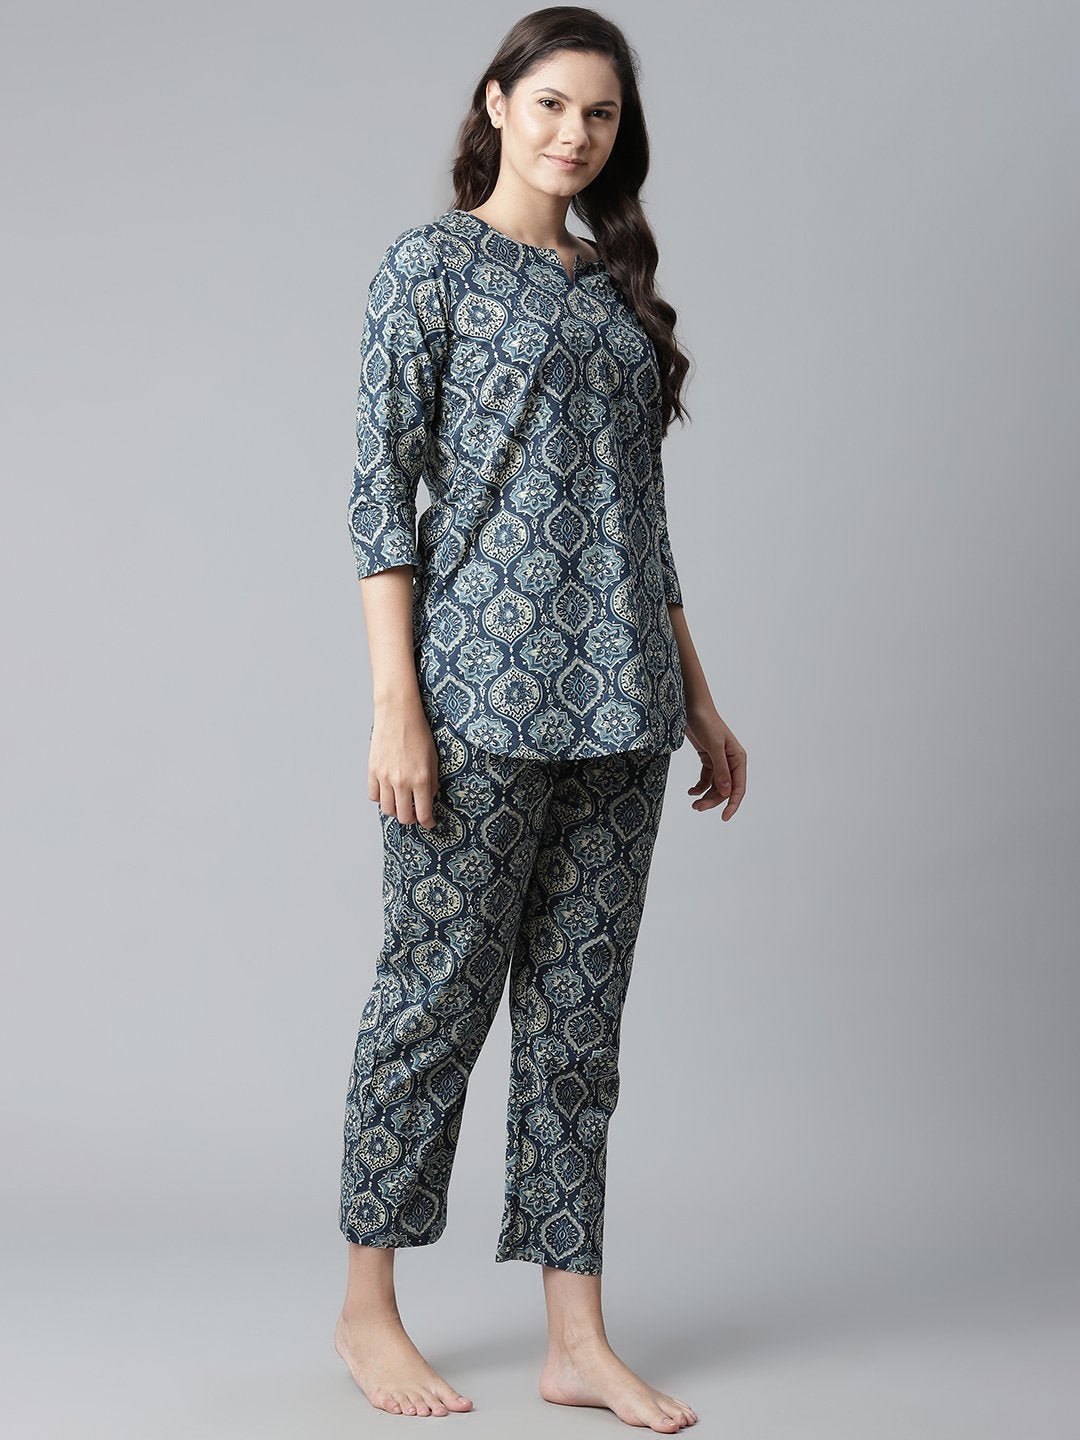 Women's Indigo Cotton Nightwear/Loungewear - Noz2Toz